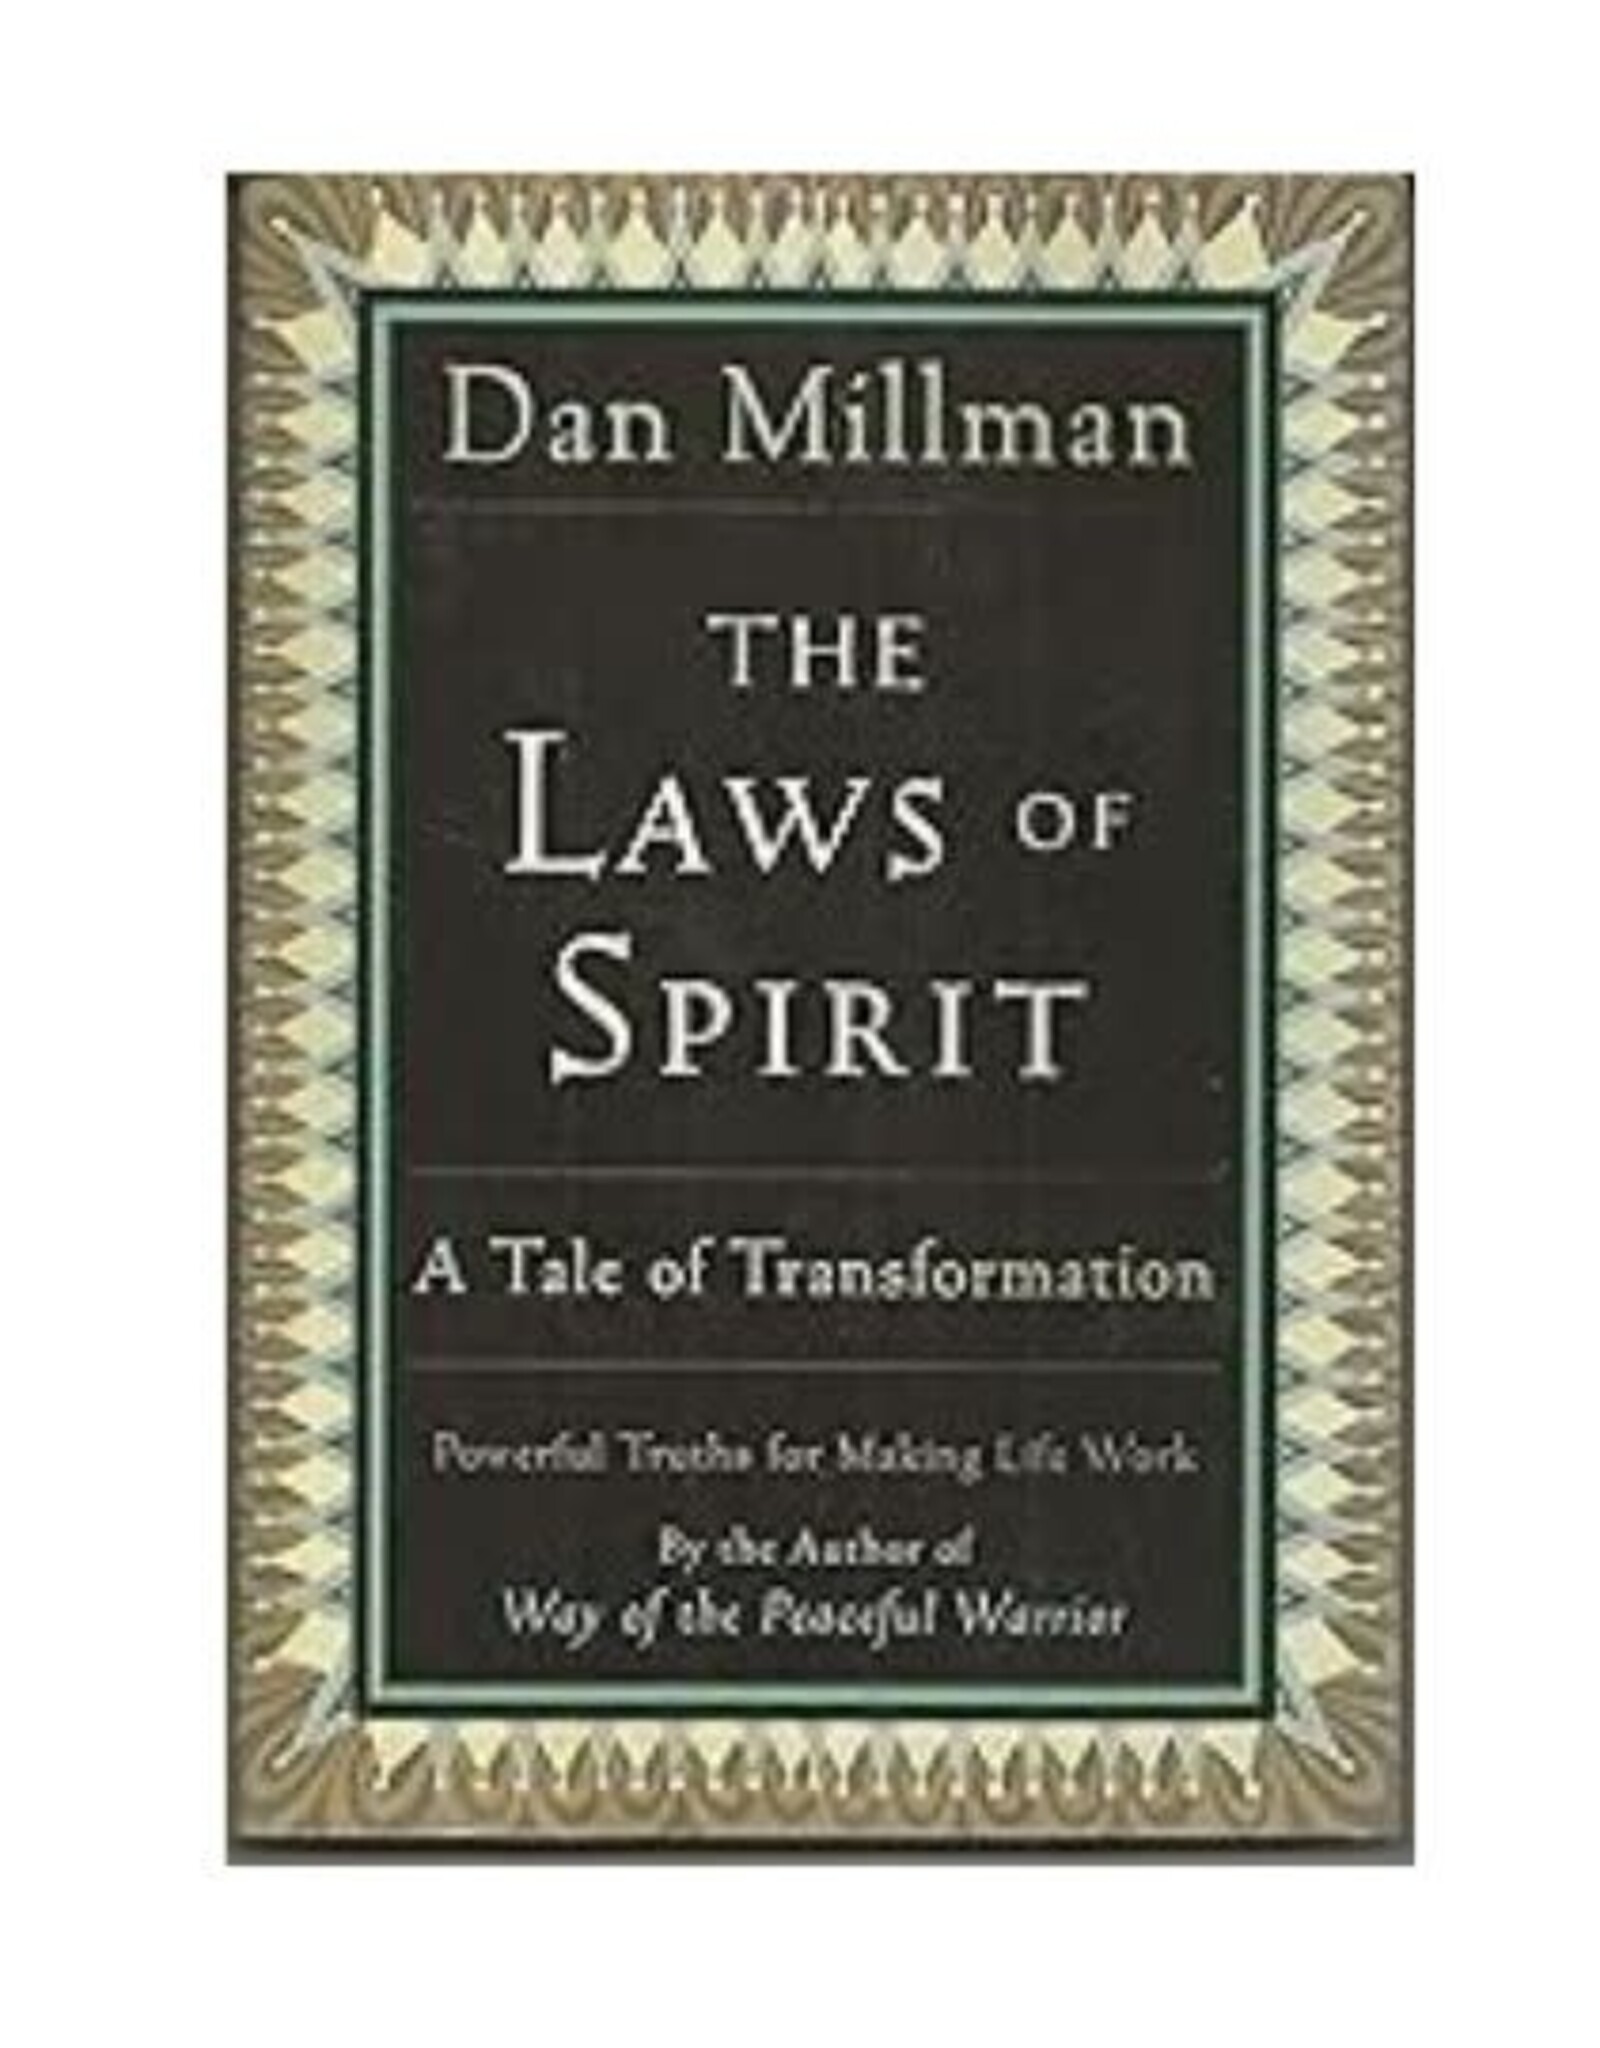 Laws of Spirit by Dan Millman